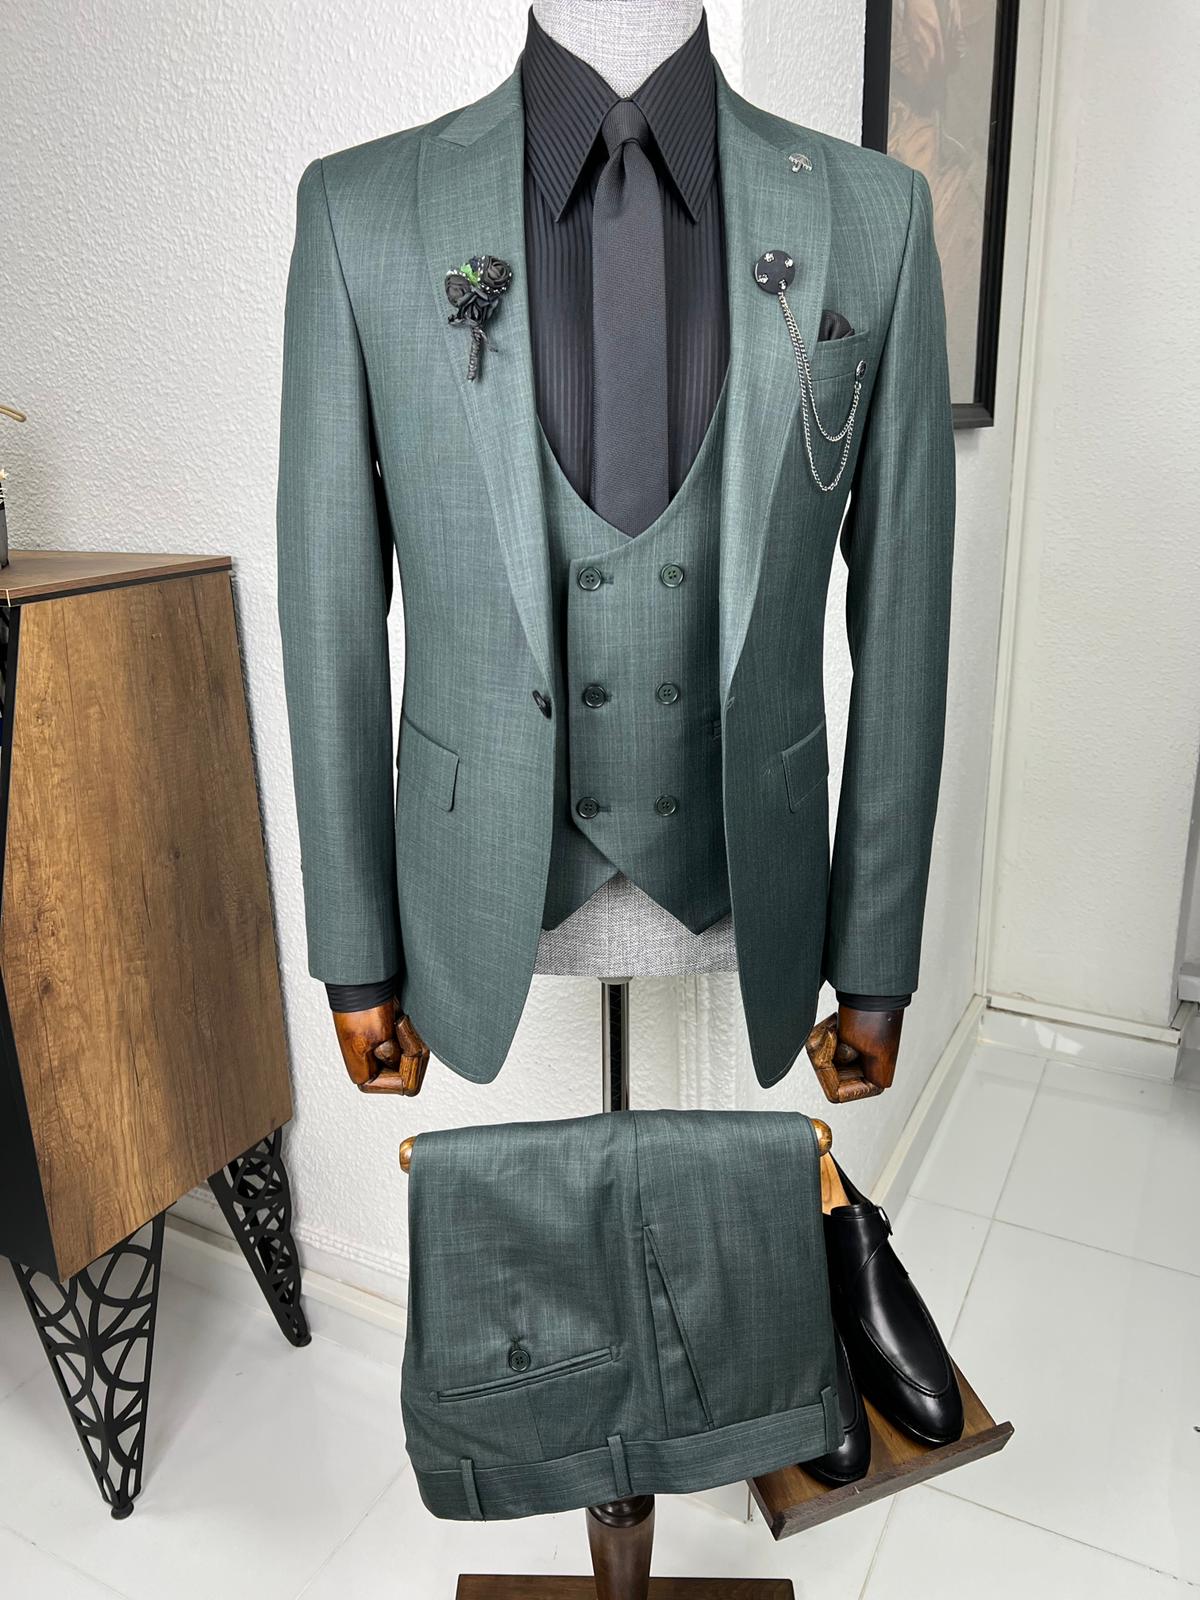 Veneta Slim Fit High Quality Self-Patterned Green Suit